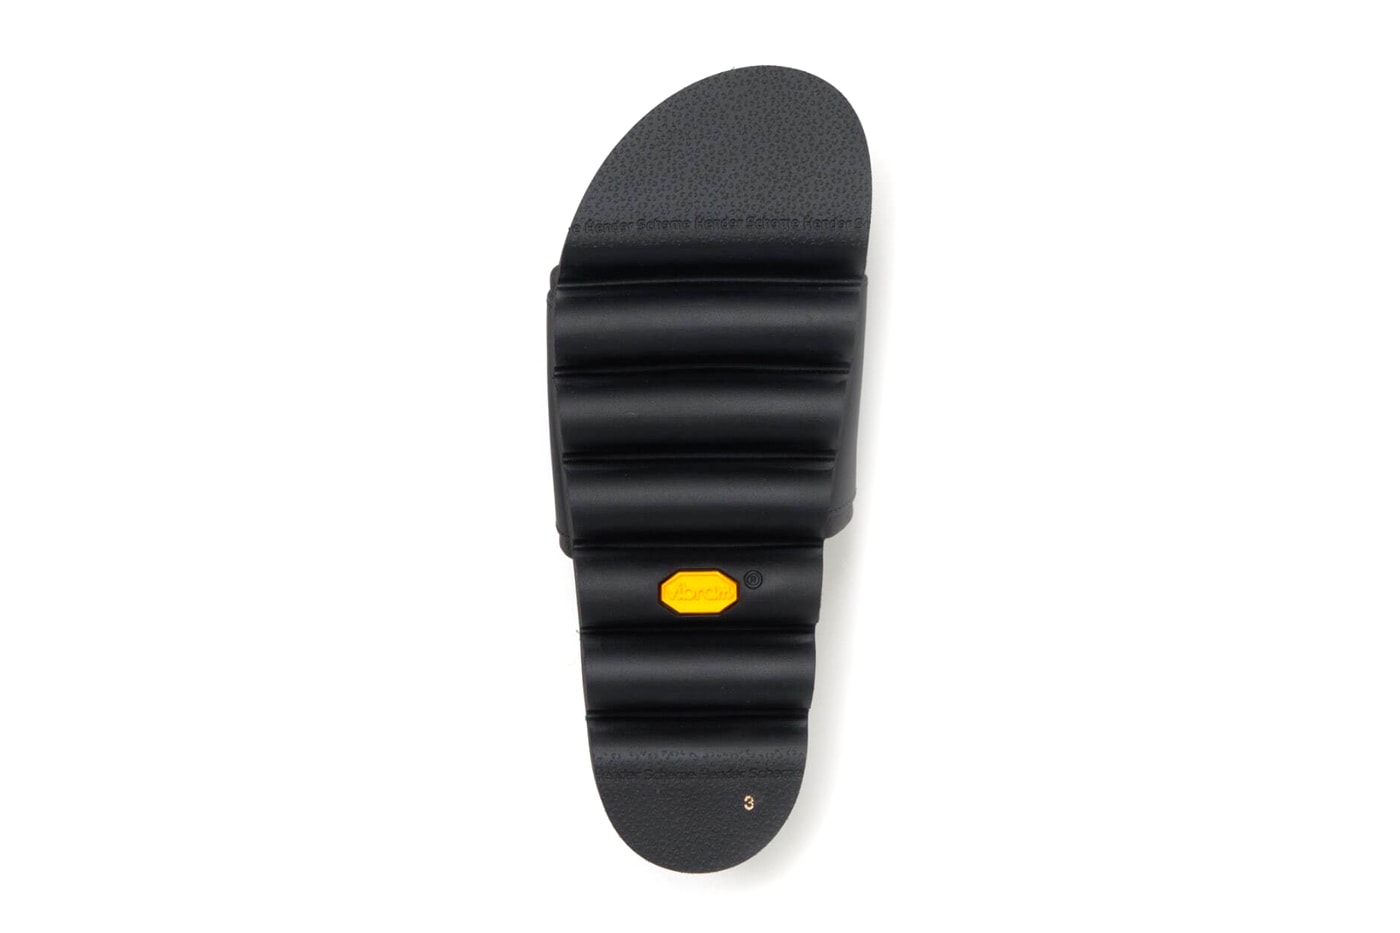 Hender Scheme Caterpillar sandals slippers vibram cowhide cork may 20 release info date price